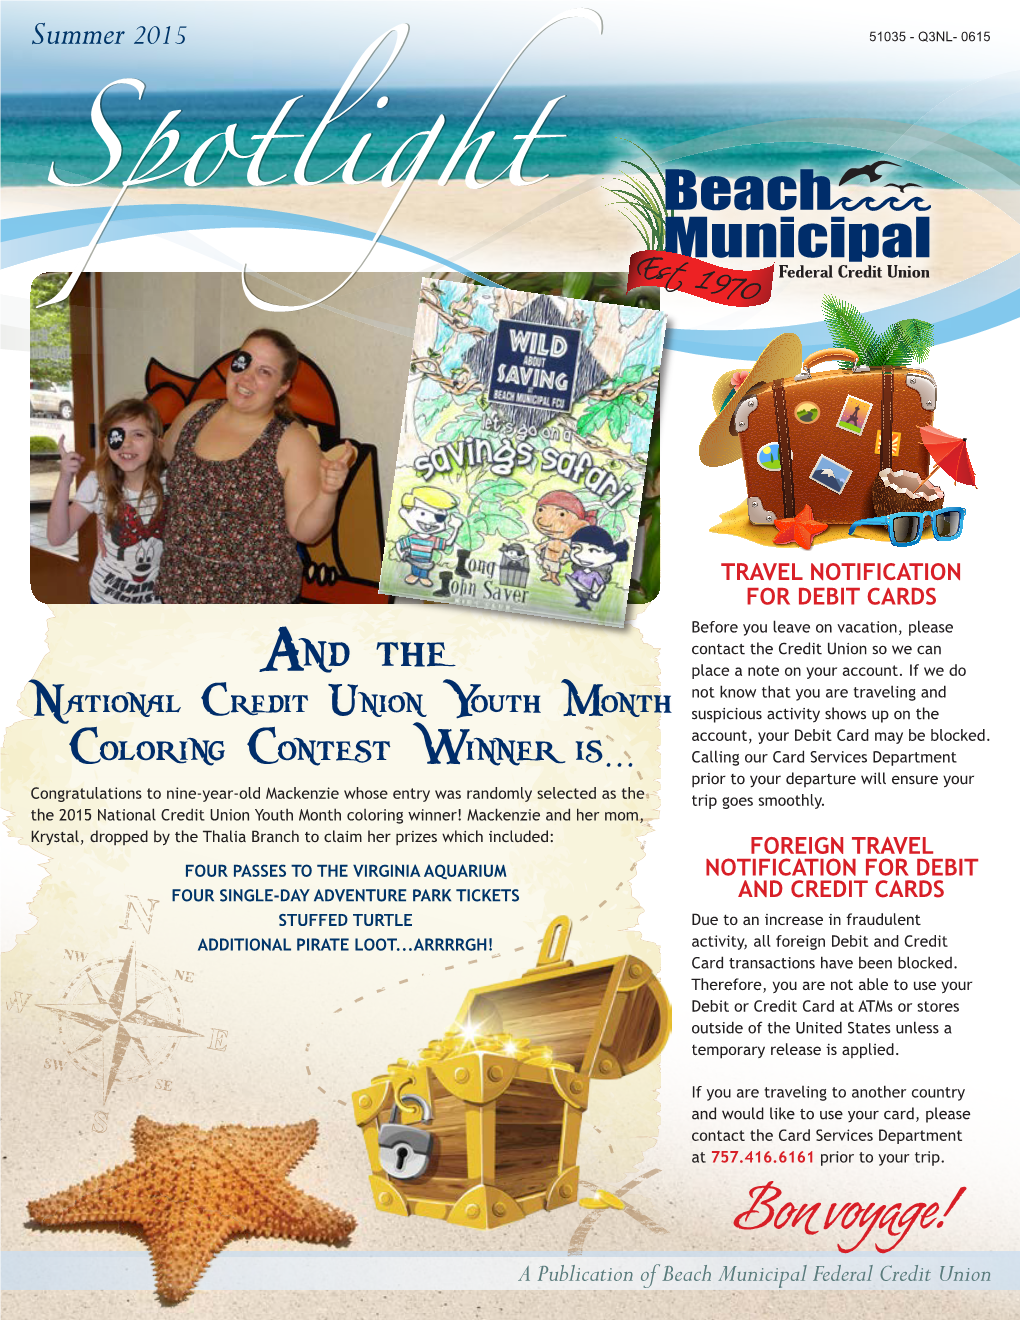 A Publication of Beach Municipal Federal Credit Union